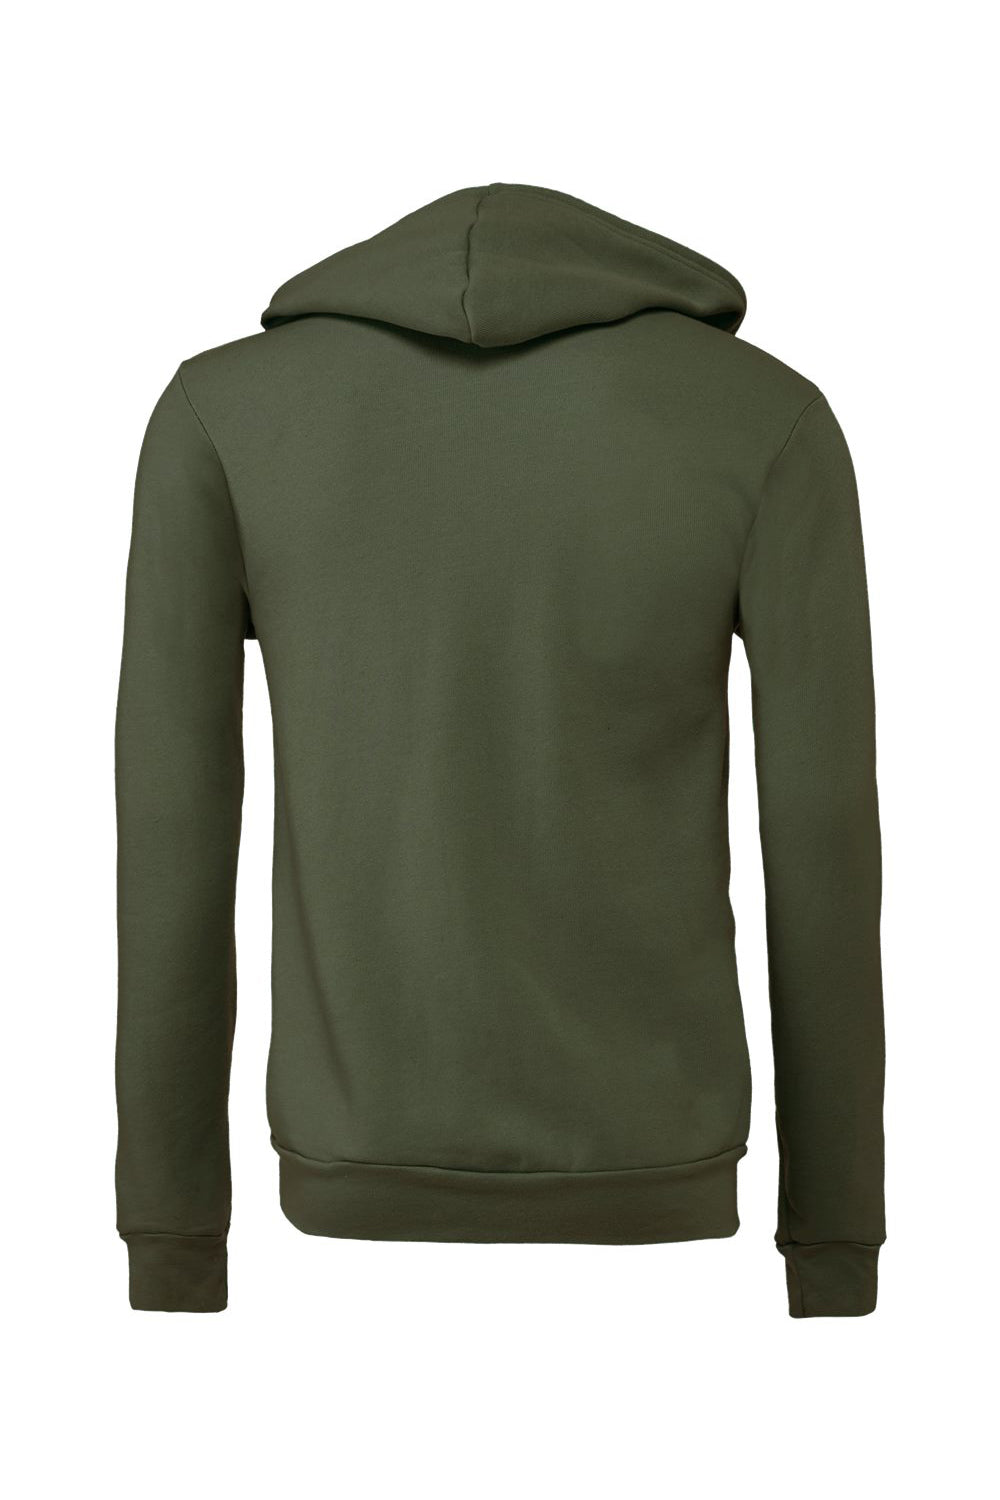 Bella + Canvas BC3739/3739 Mens Fleece Full Zip Hooded Sweatshirt Hoodie Military Green Flat Back